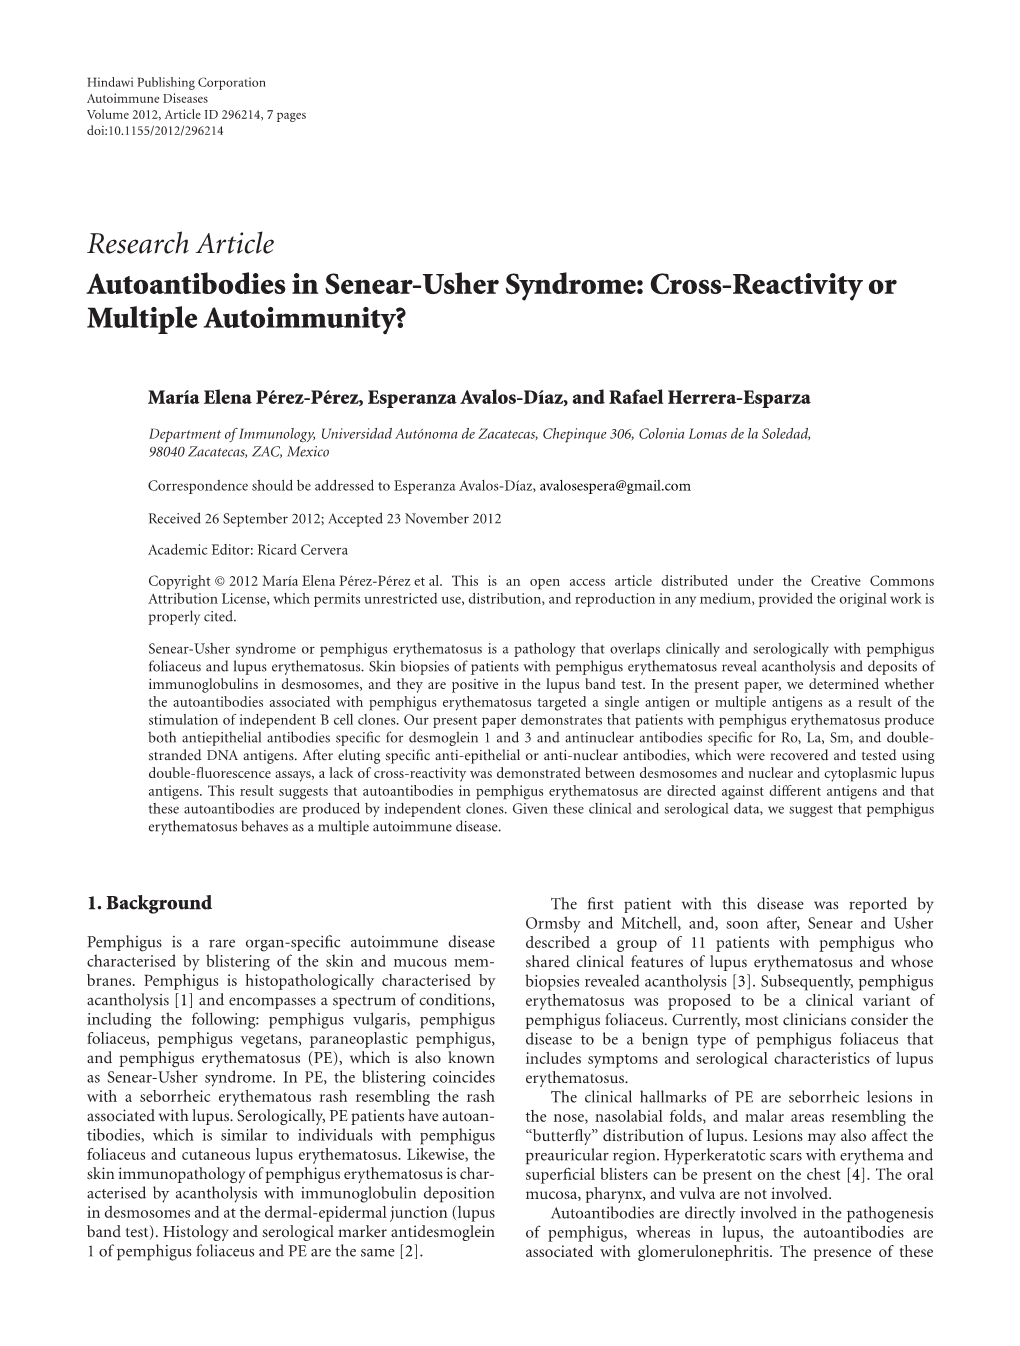 Autoantibodies in Senear-Usher Syndrome: Cross-Reactivity Or Multiple Autoimmunity?